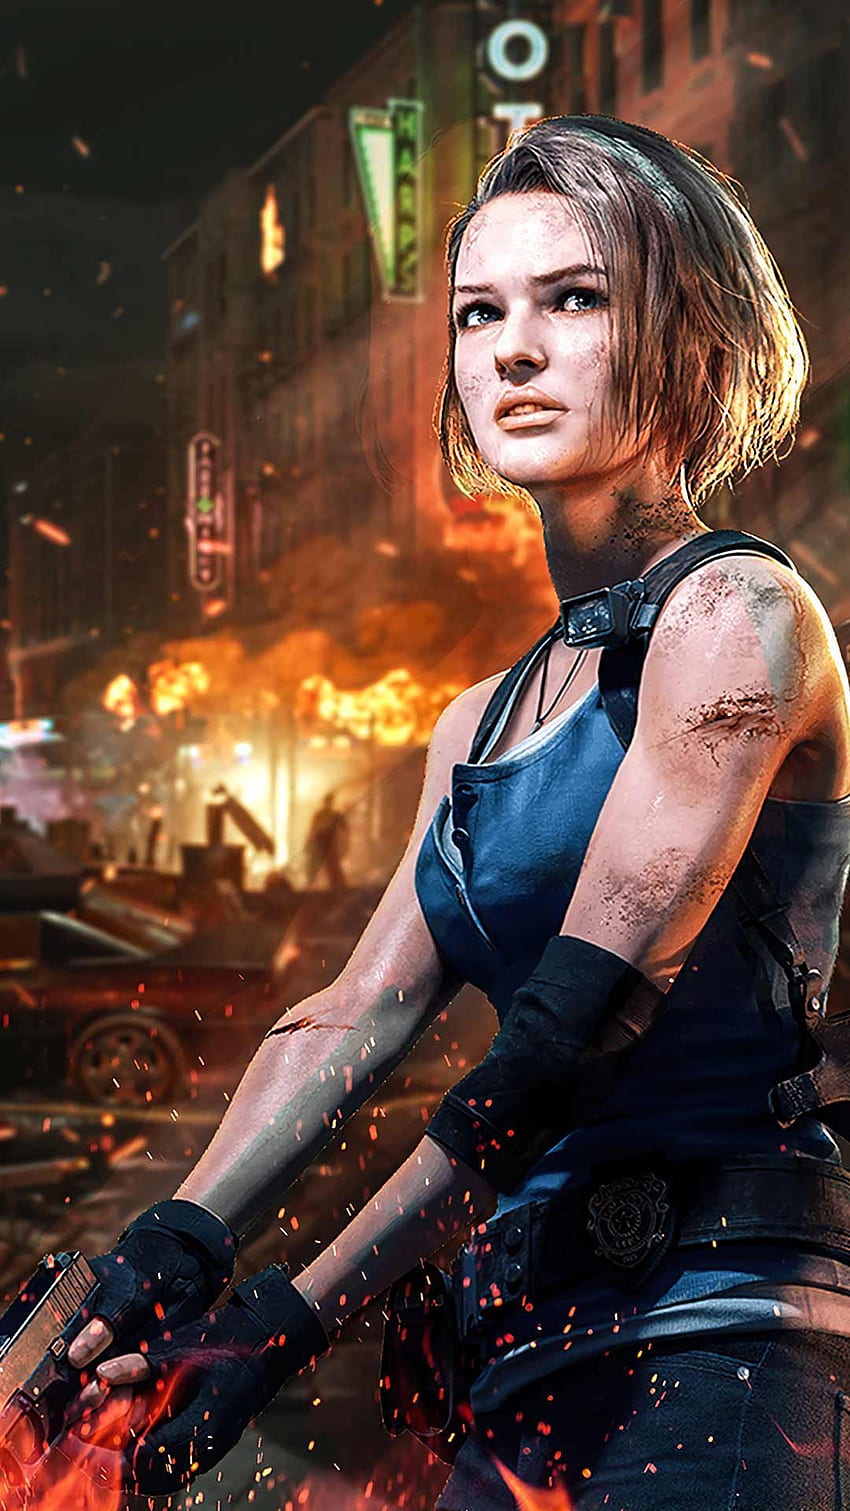 Jill valentine re3 remake phone background 2020 game art Poster en iPhone android. Resident evil girl, Resident evil anime, Resident evil 3 remake, Resident Evil 3 Teléfono fondo de pantalla del teléfono